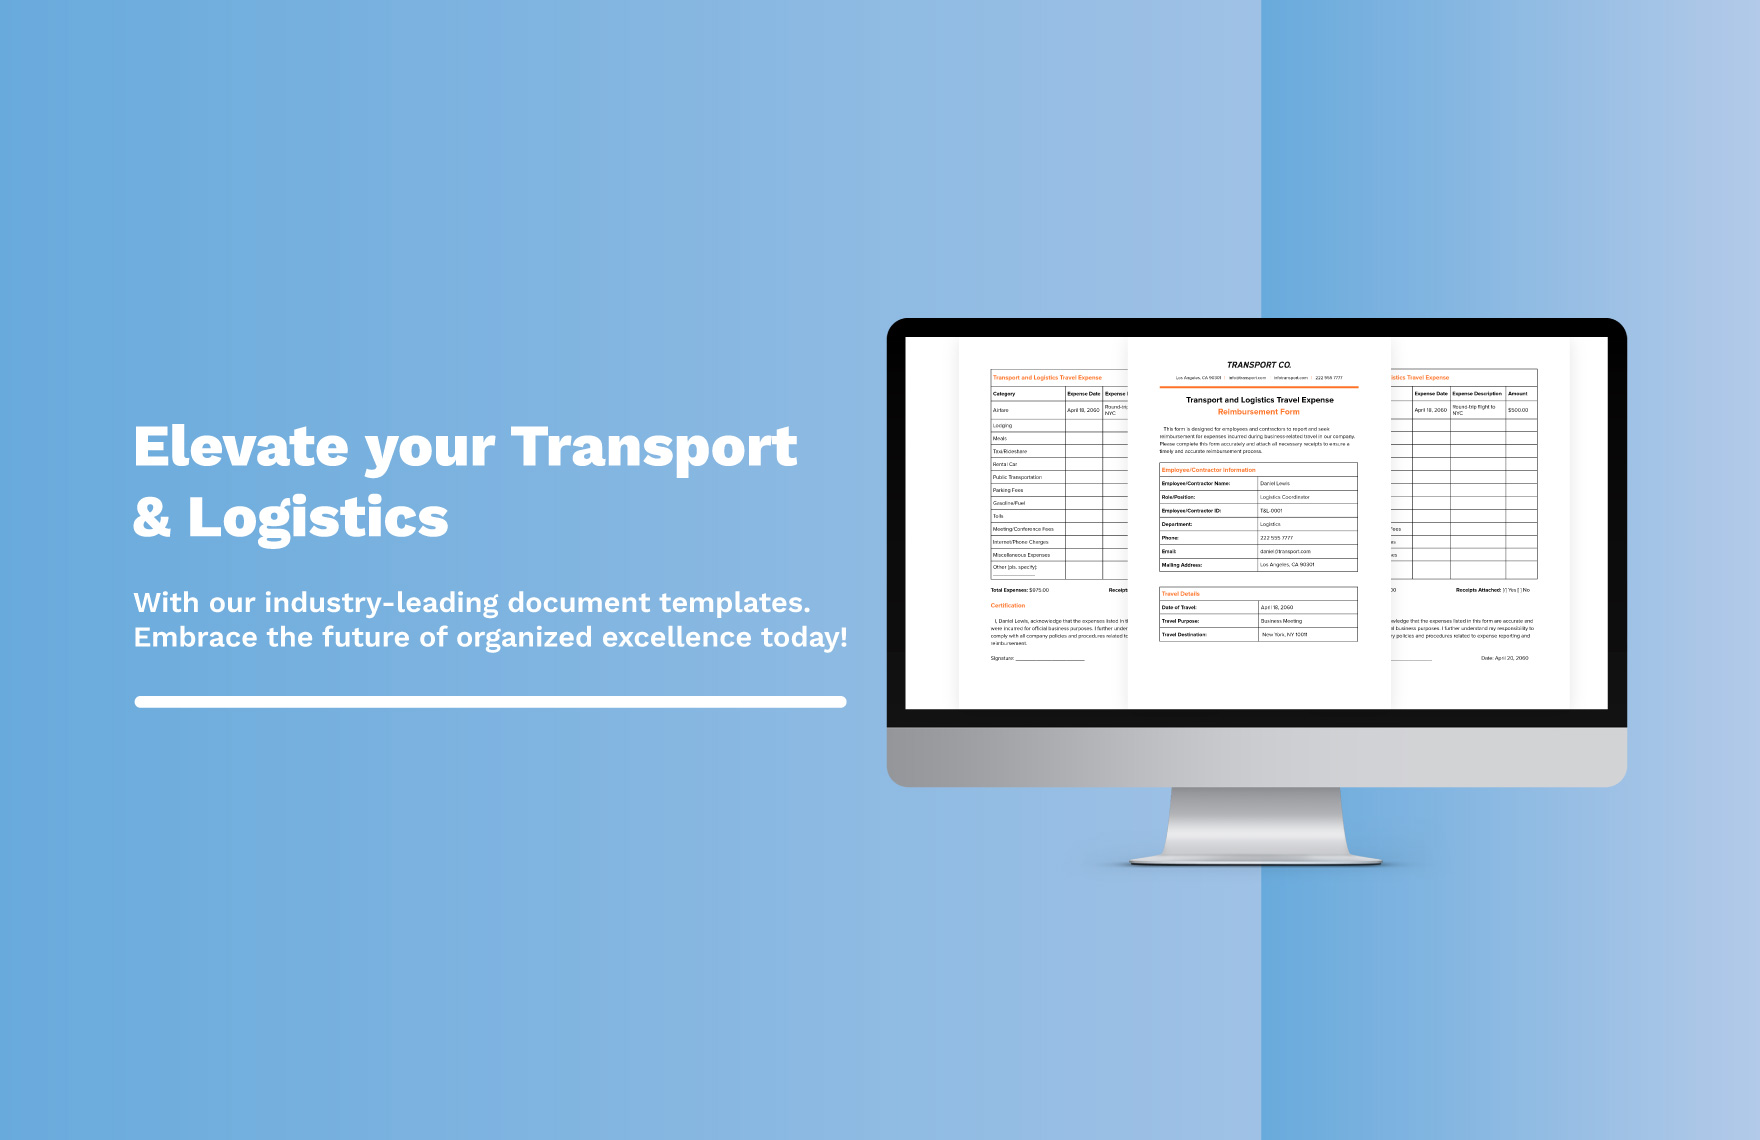 Transport and Logistics Travel Expense Reimbursement Form Template